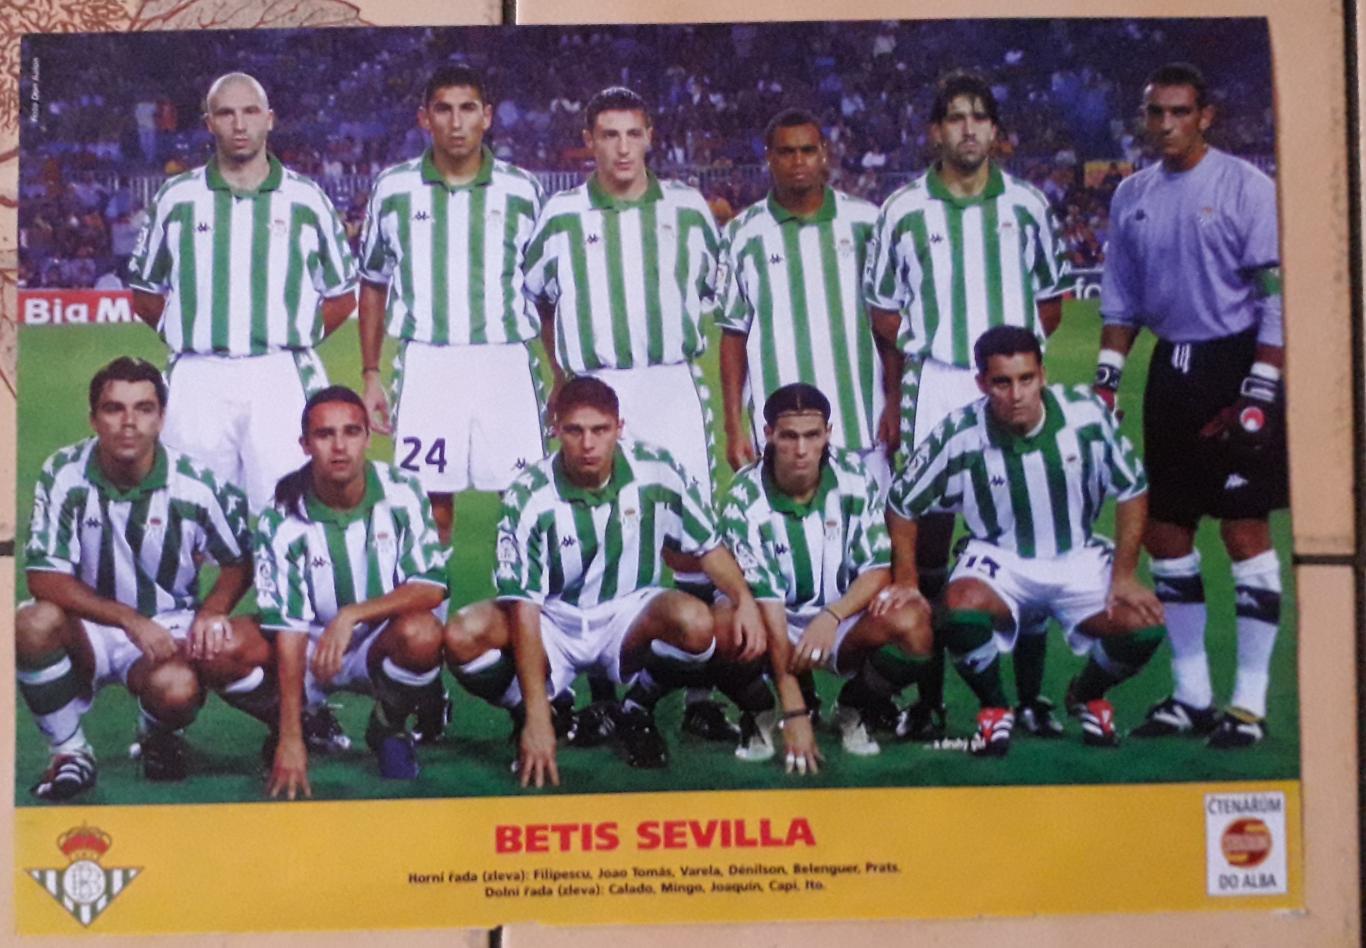 Betis Sevilla. Плакат формата А4 из журнала Stadion.